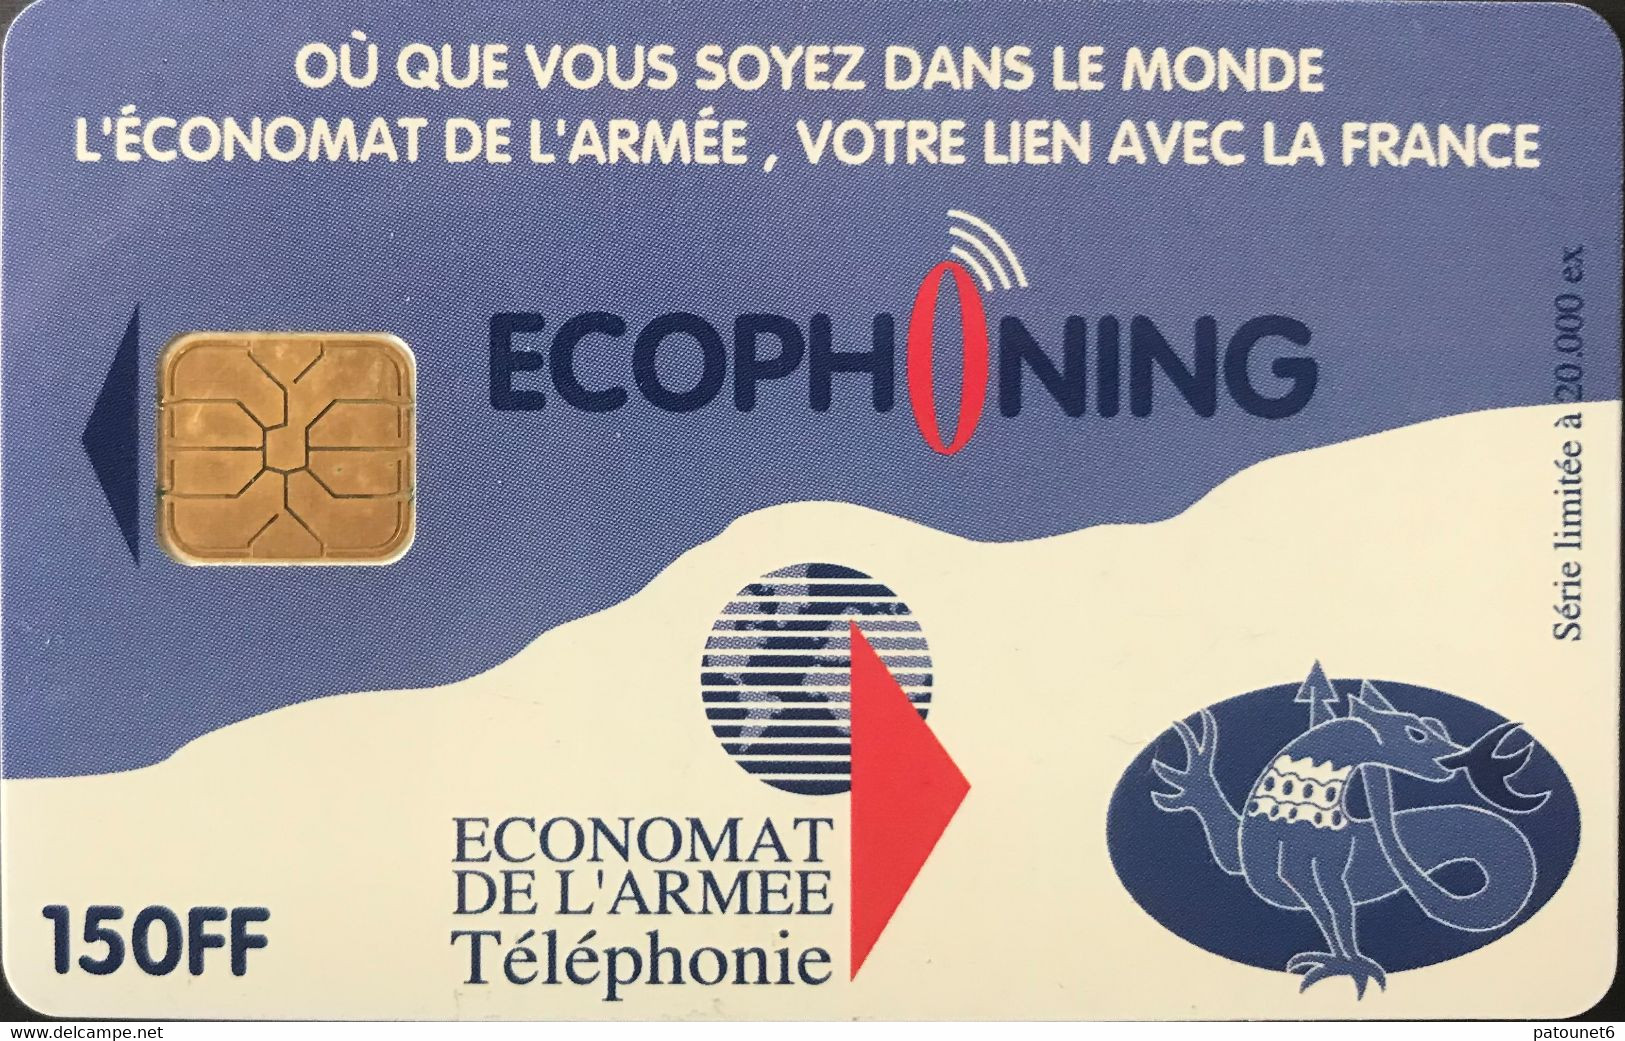 FRANCE  -  ARMEE  -  Phonecard  -  ECOPHONING  -  SALAMANDRE  -  Violet  -  150 FF - Military Phonecards